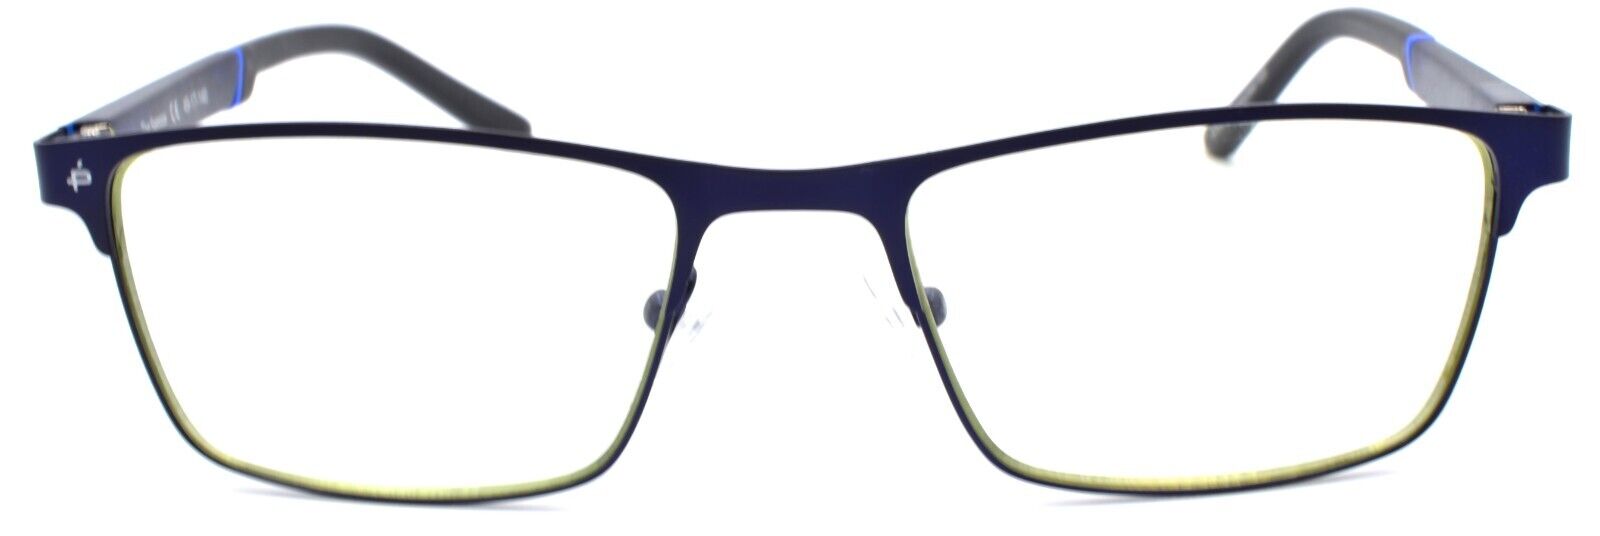 2-Prive Revaux The Spinoza Eyeglasses Frames Small 49-17-140 Midnight Blue-818893023279-IKSpecs